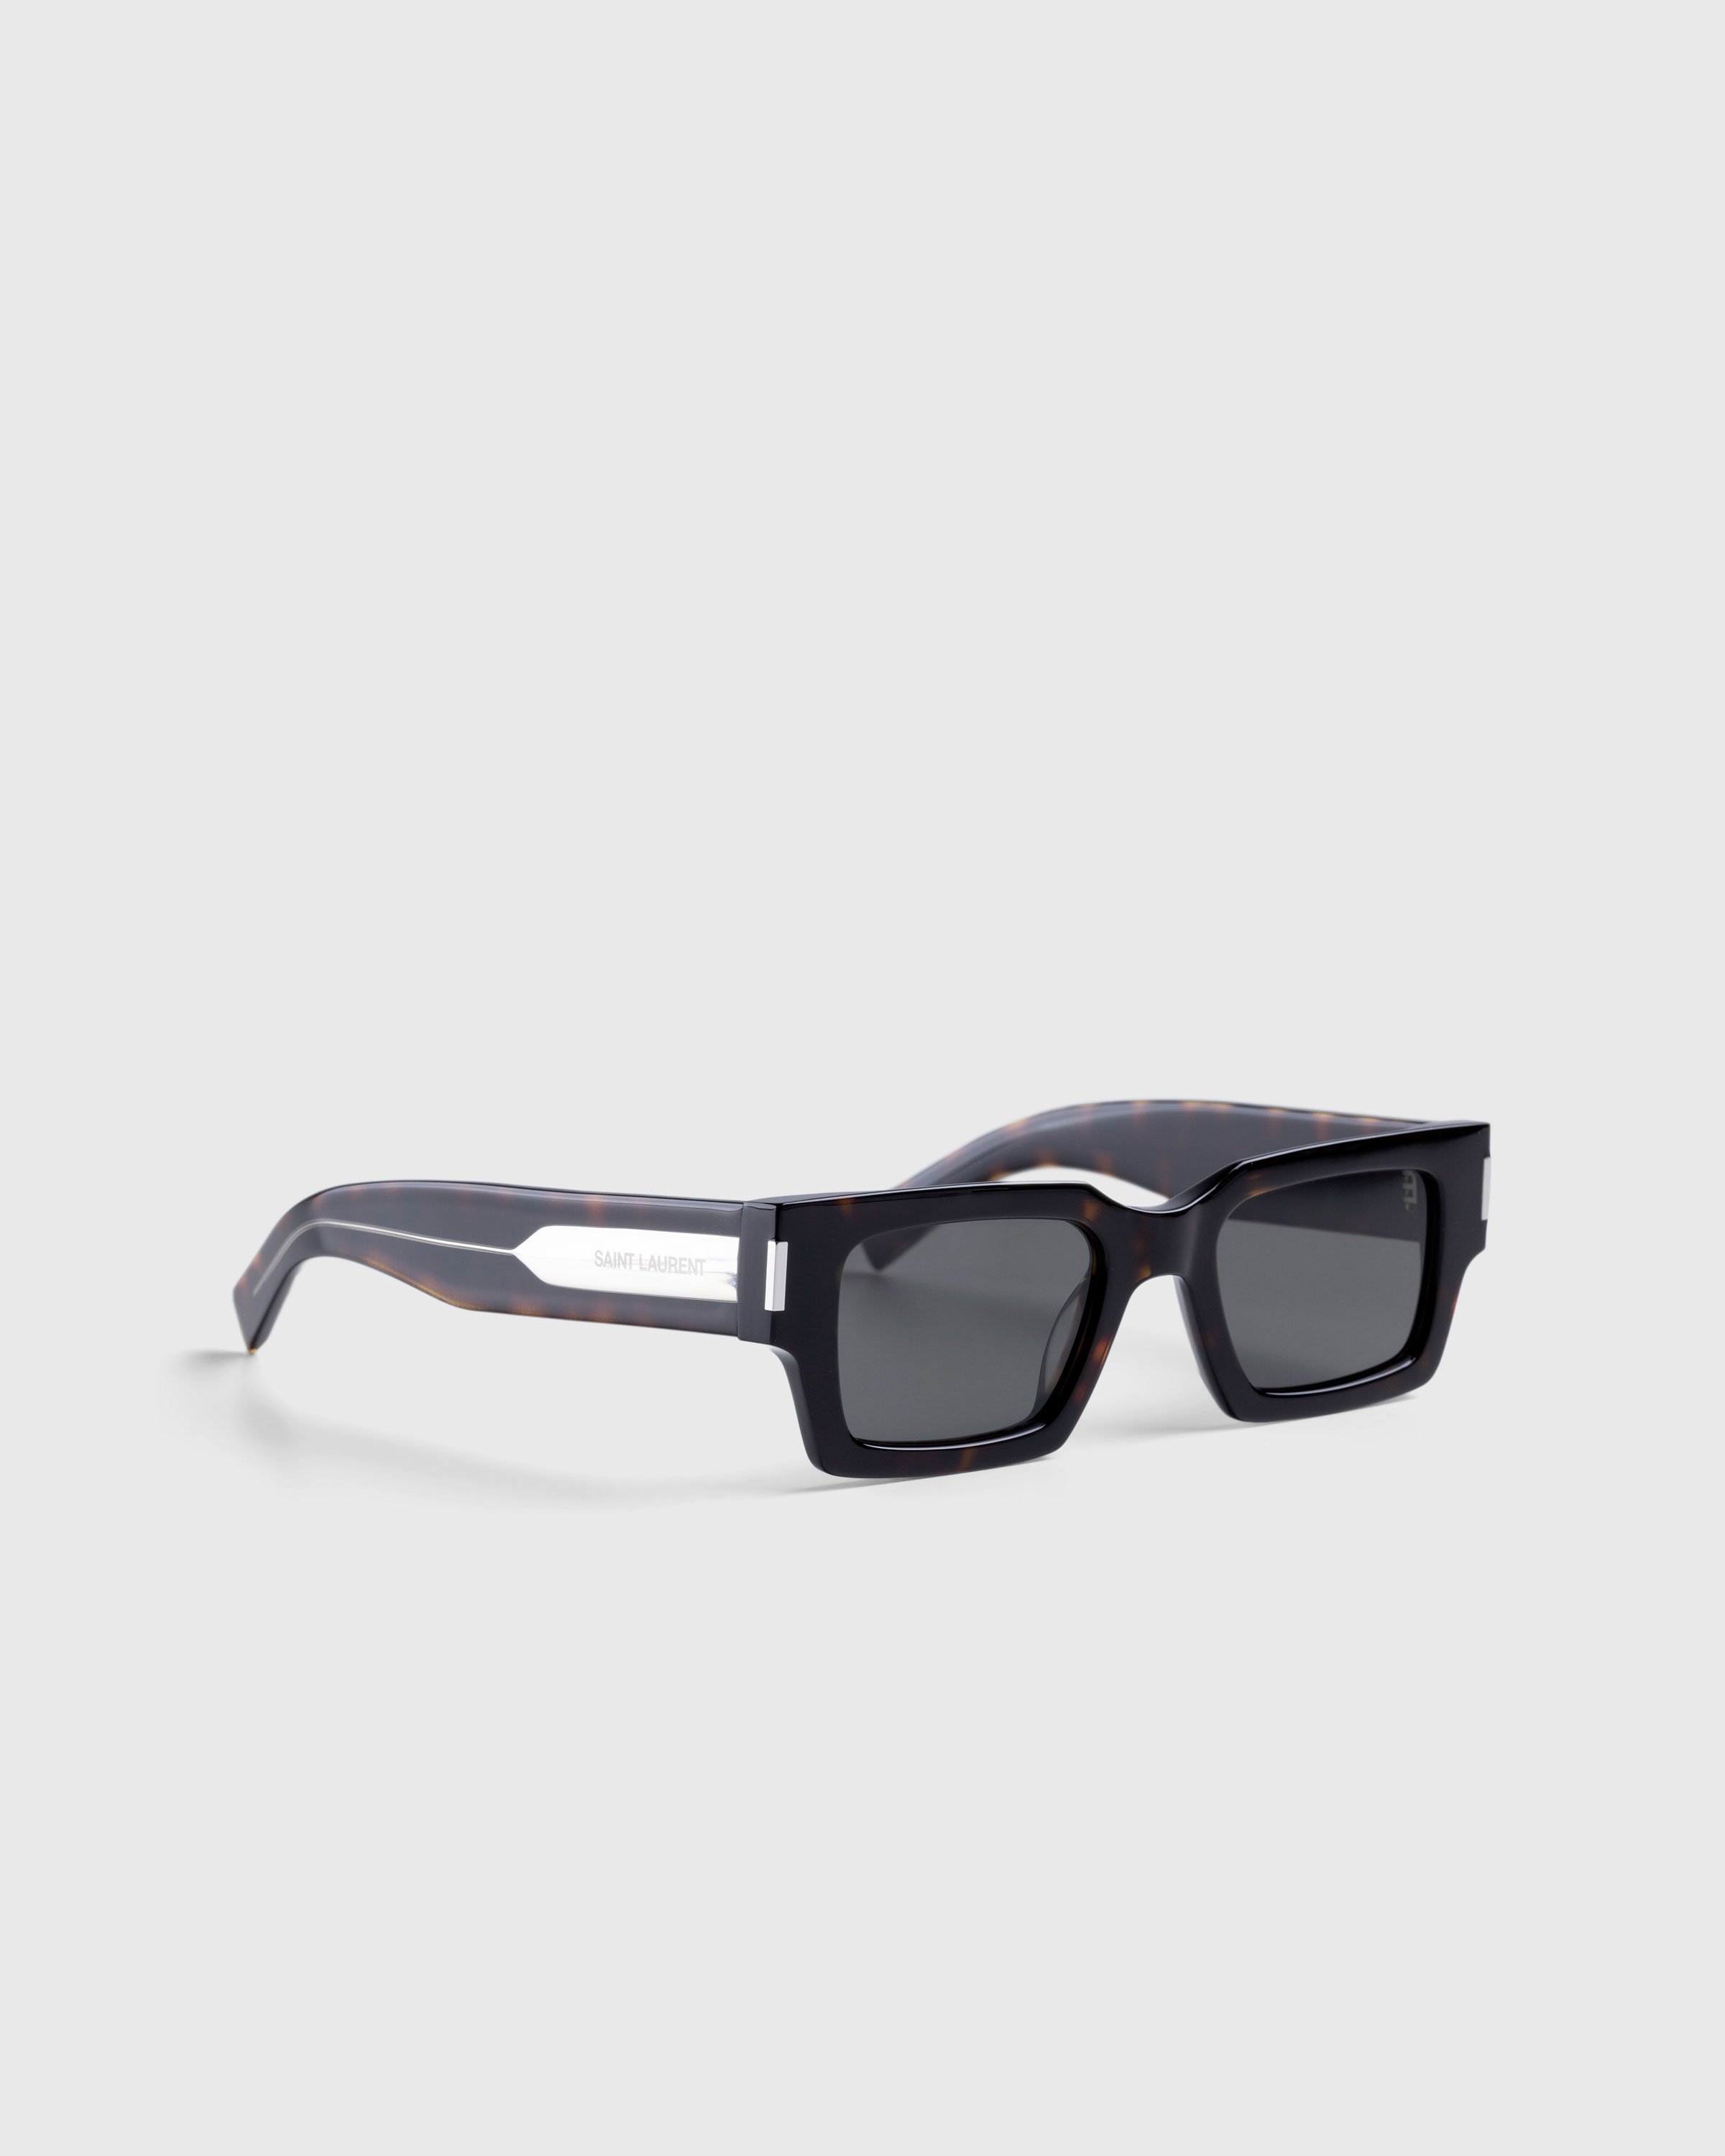 Saint Laurent - SL 572 Square Frame Sunglasses Havana/Crystal/Grey - Accessories - Multi - Image 3